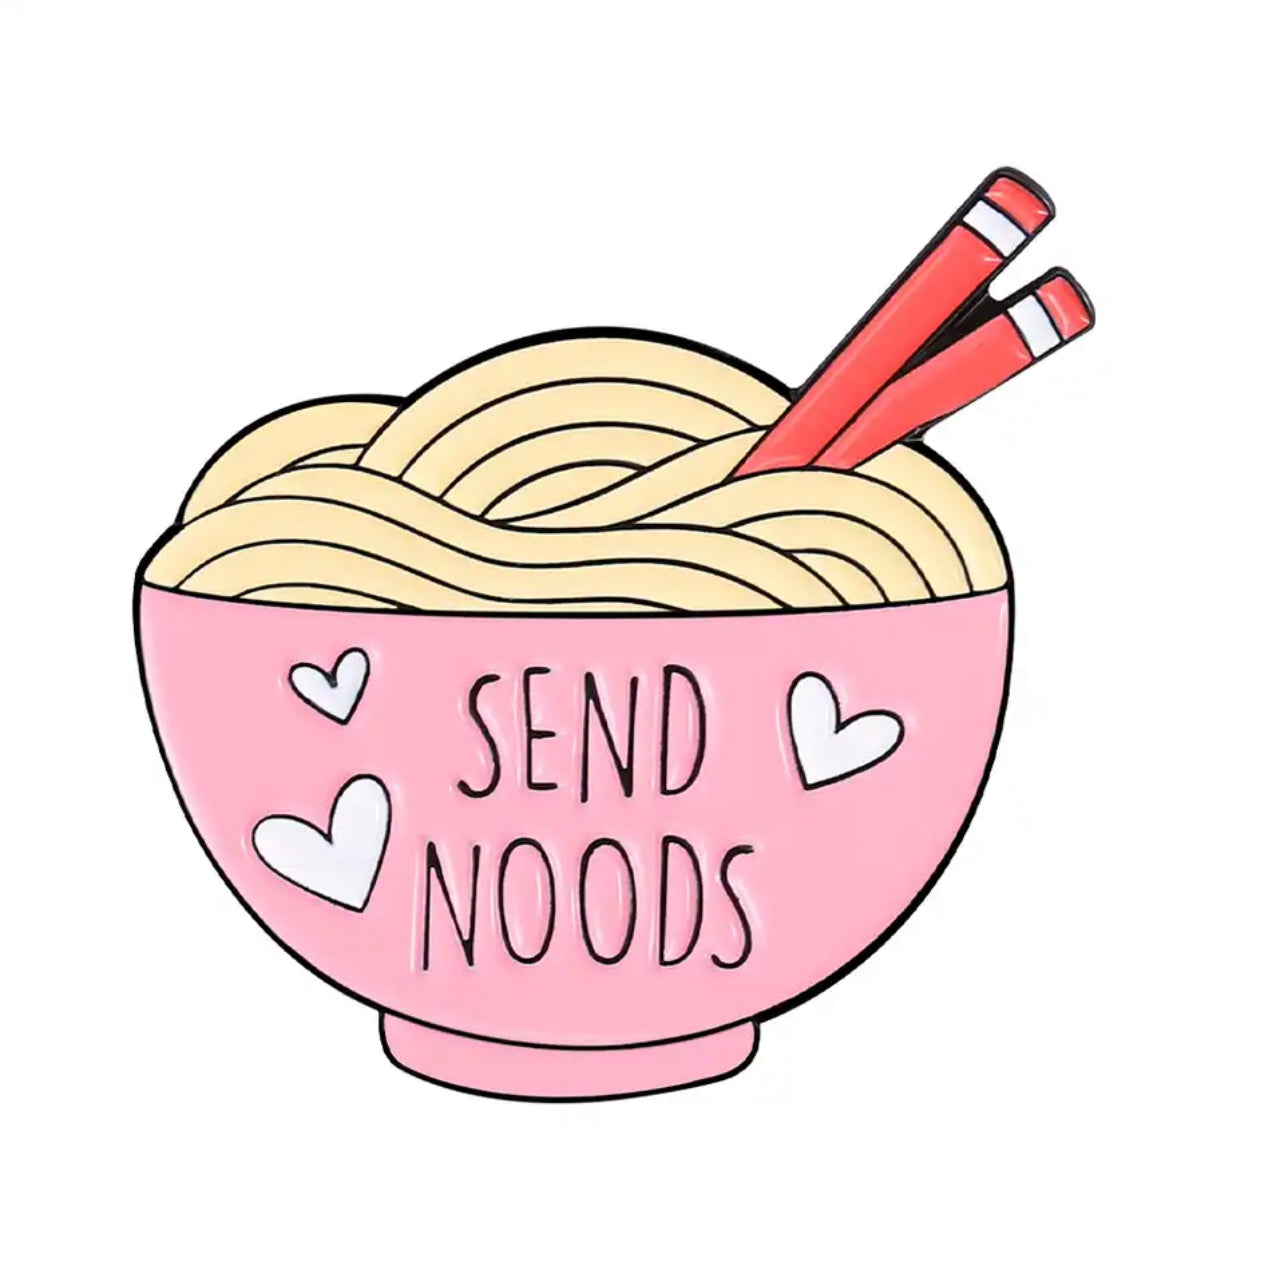 Send noods